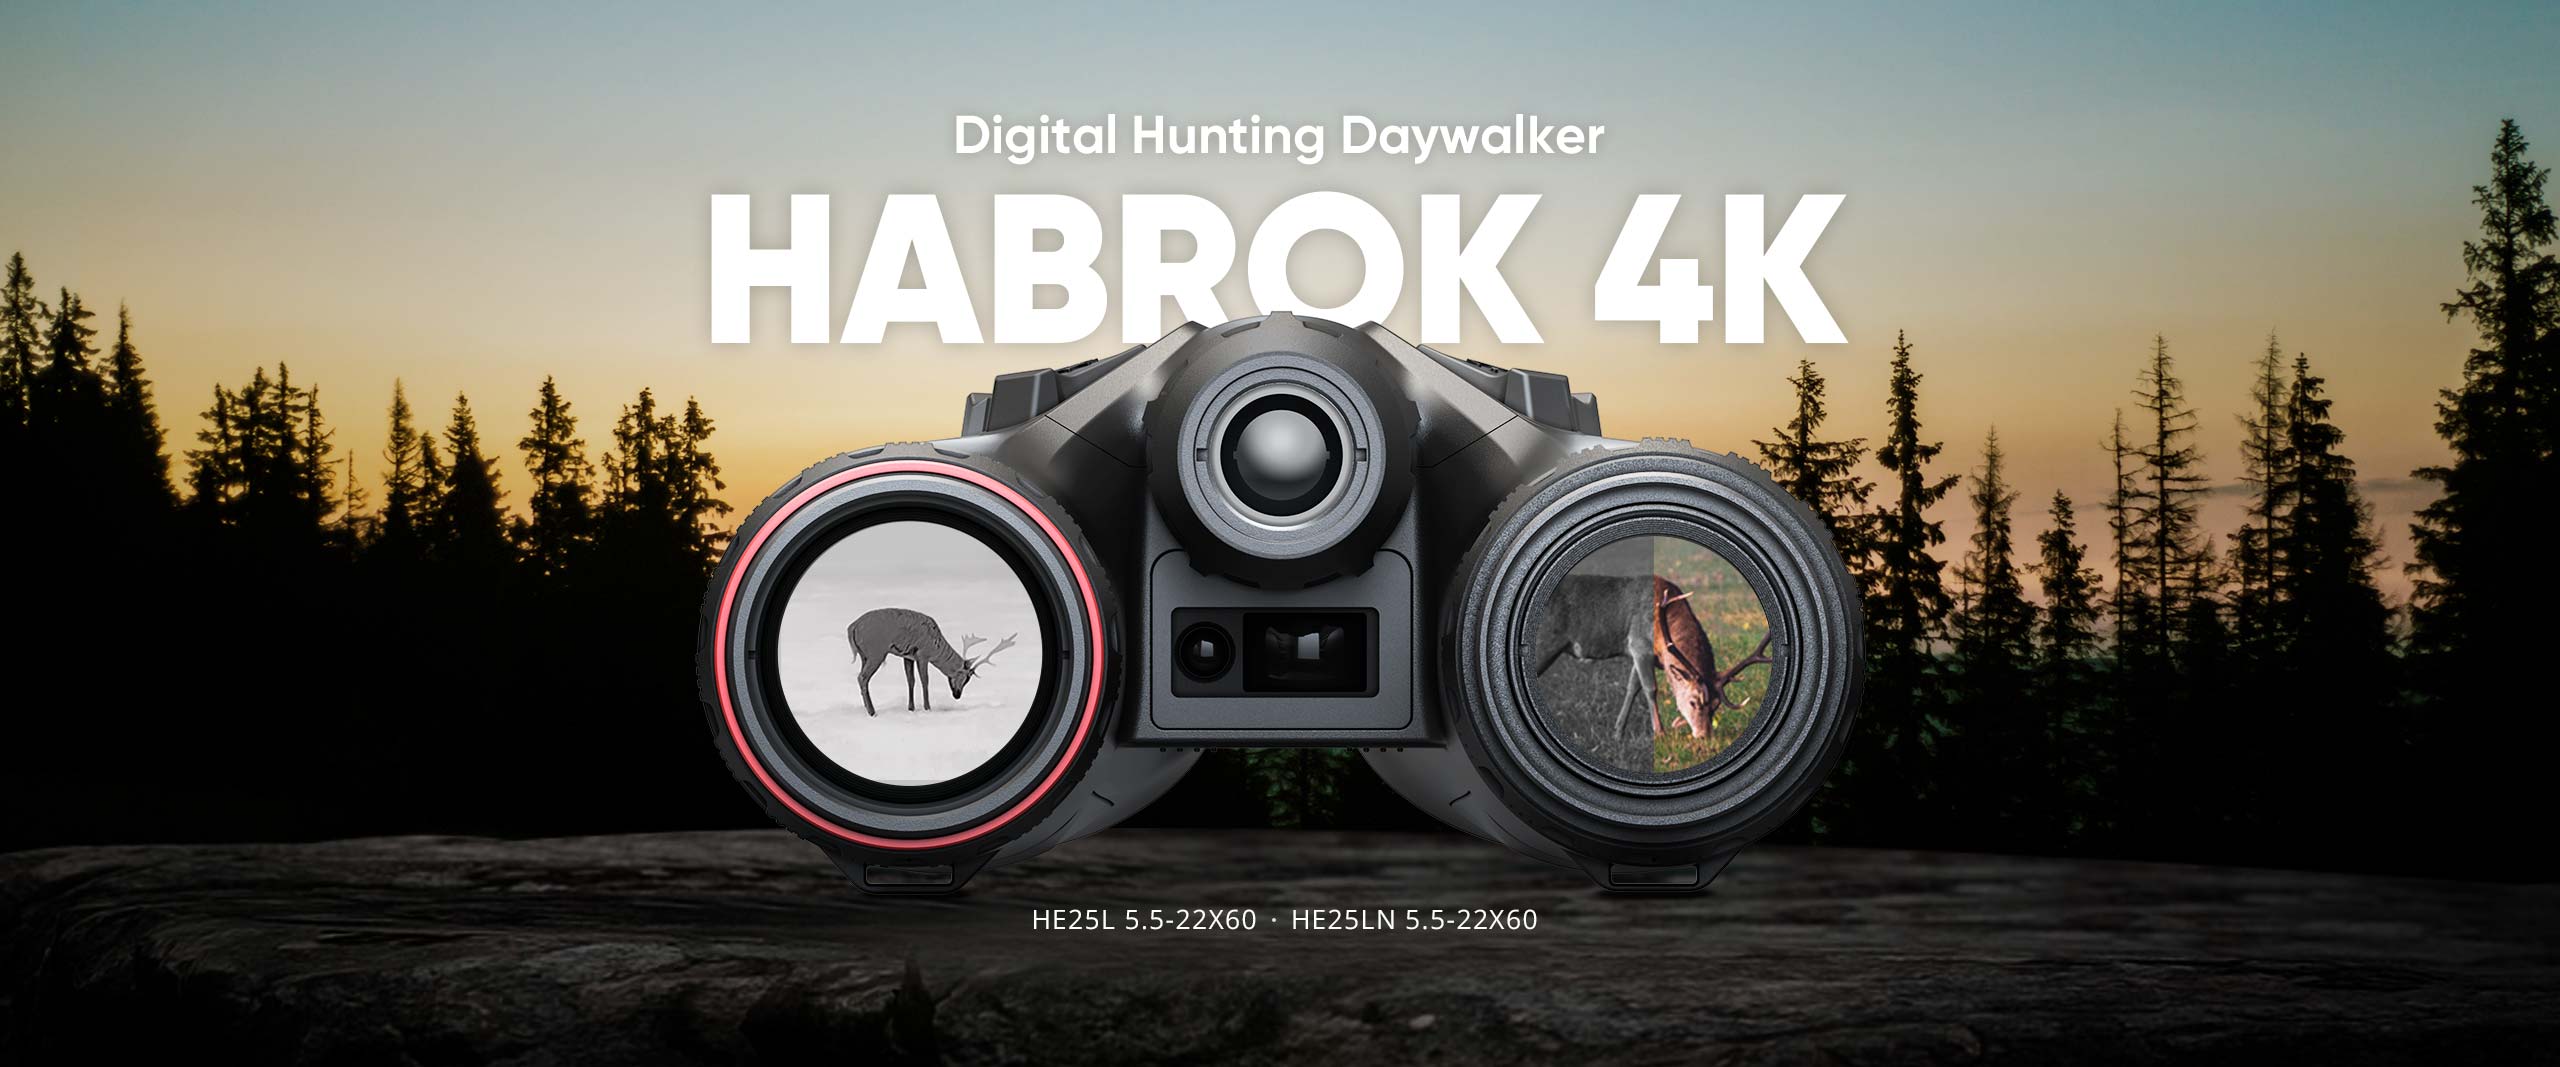 HABROK 4K Banner_Website